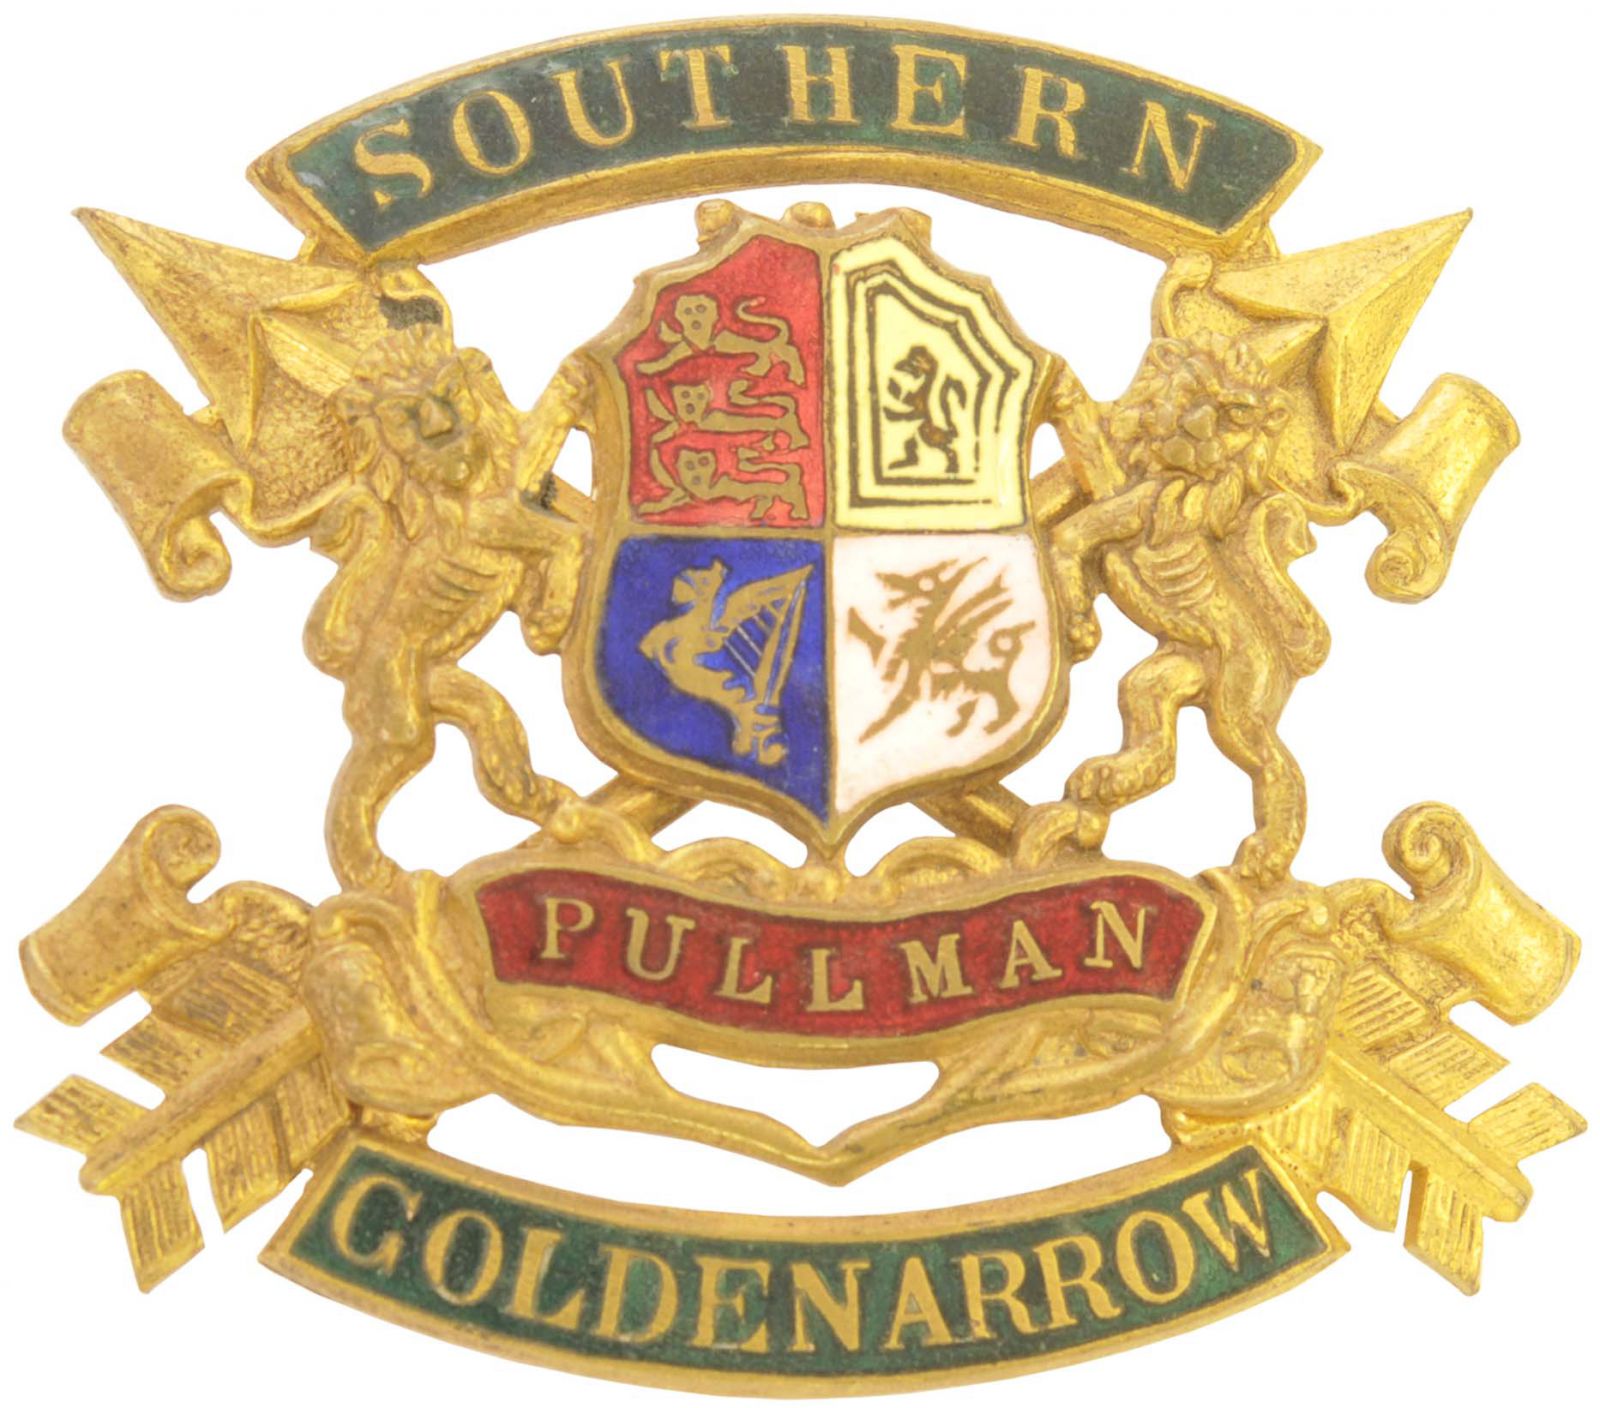 Railway Badges, Pullman, Golden Arrow, SR: A Southern Railway cap badge, GOLDEN ARROW, PULLMAN,